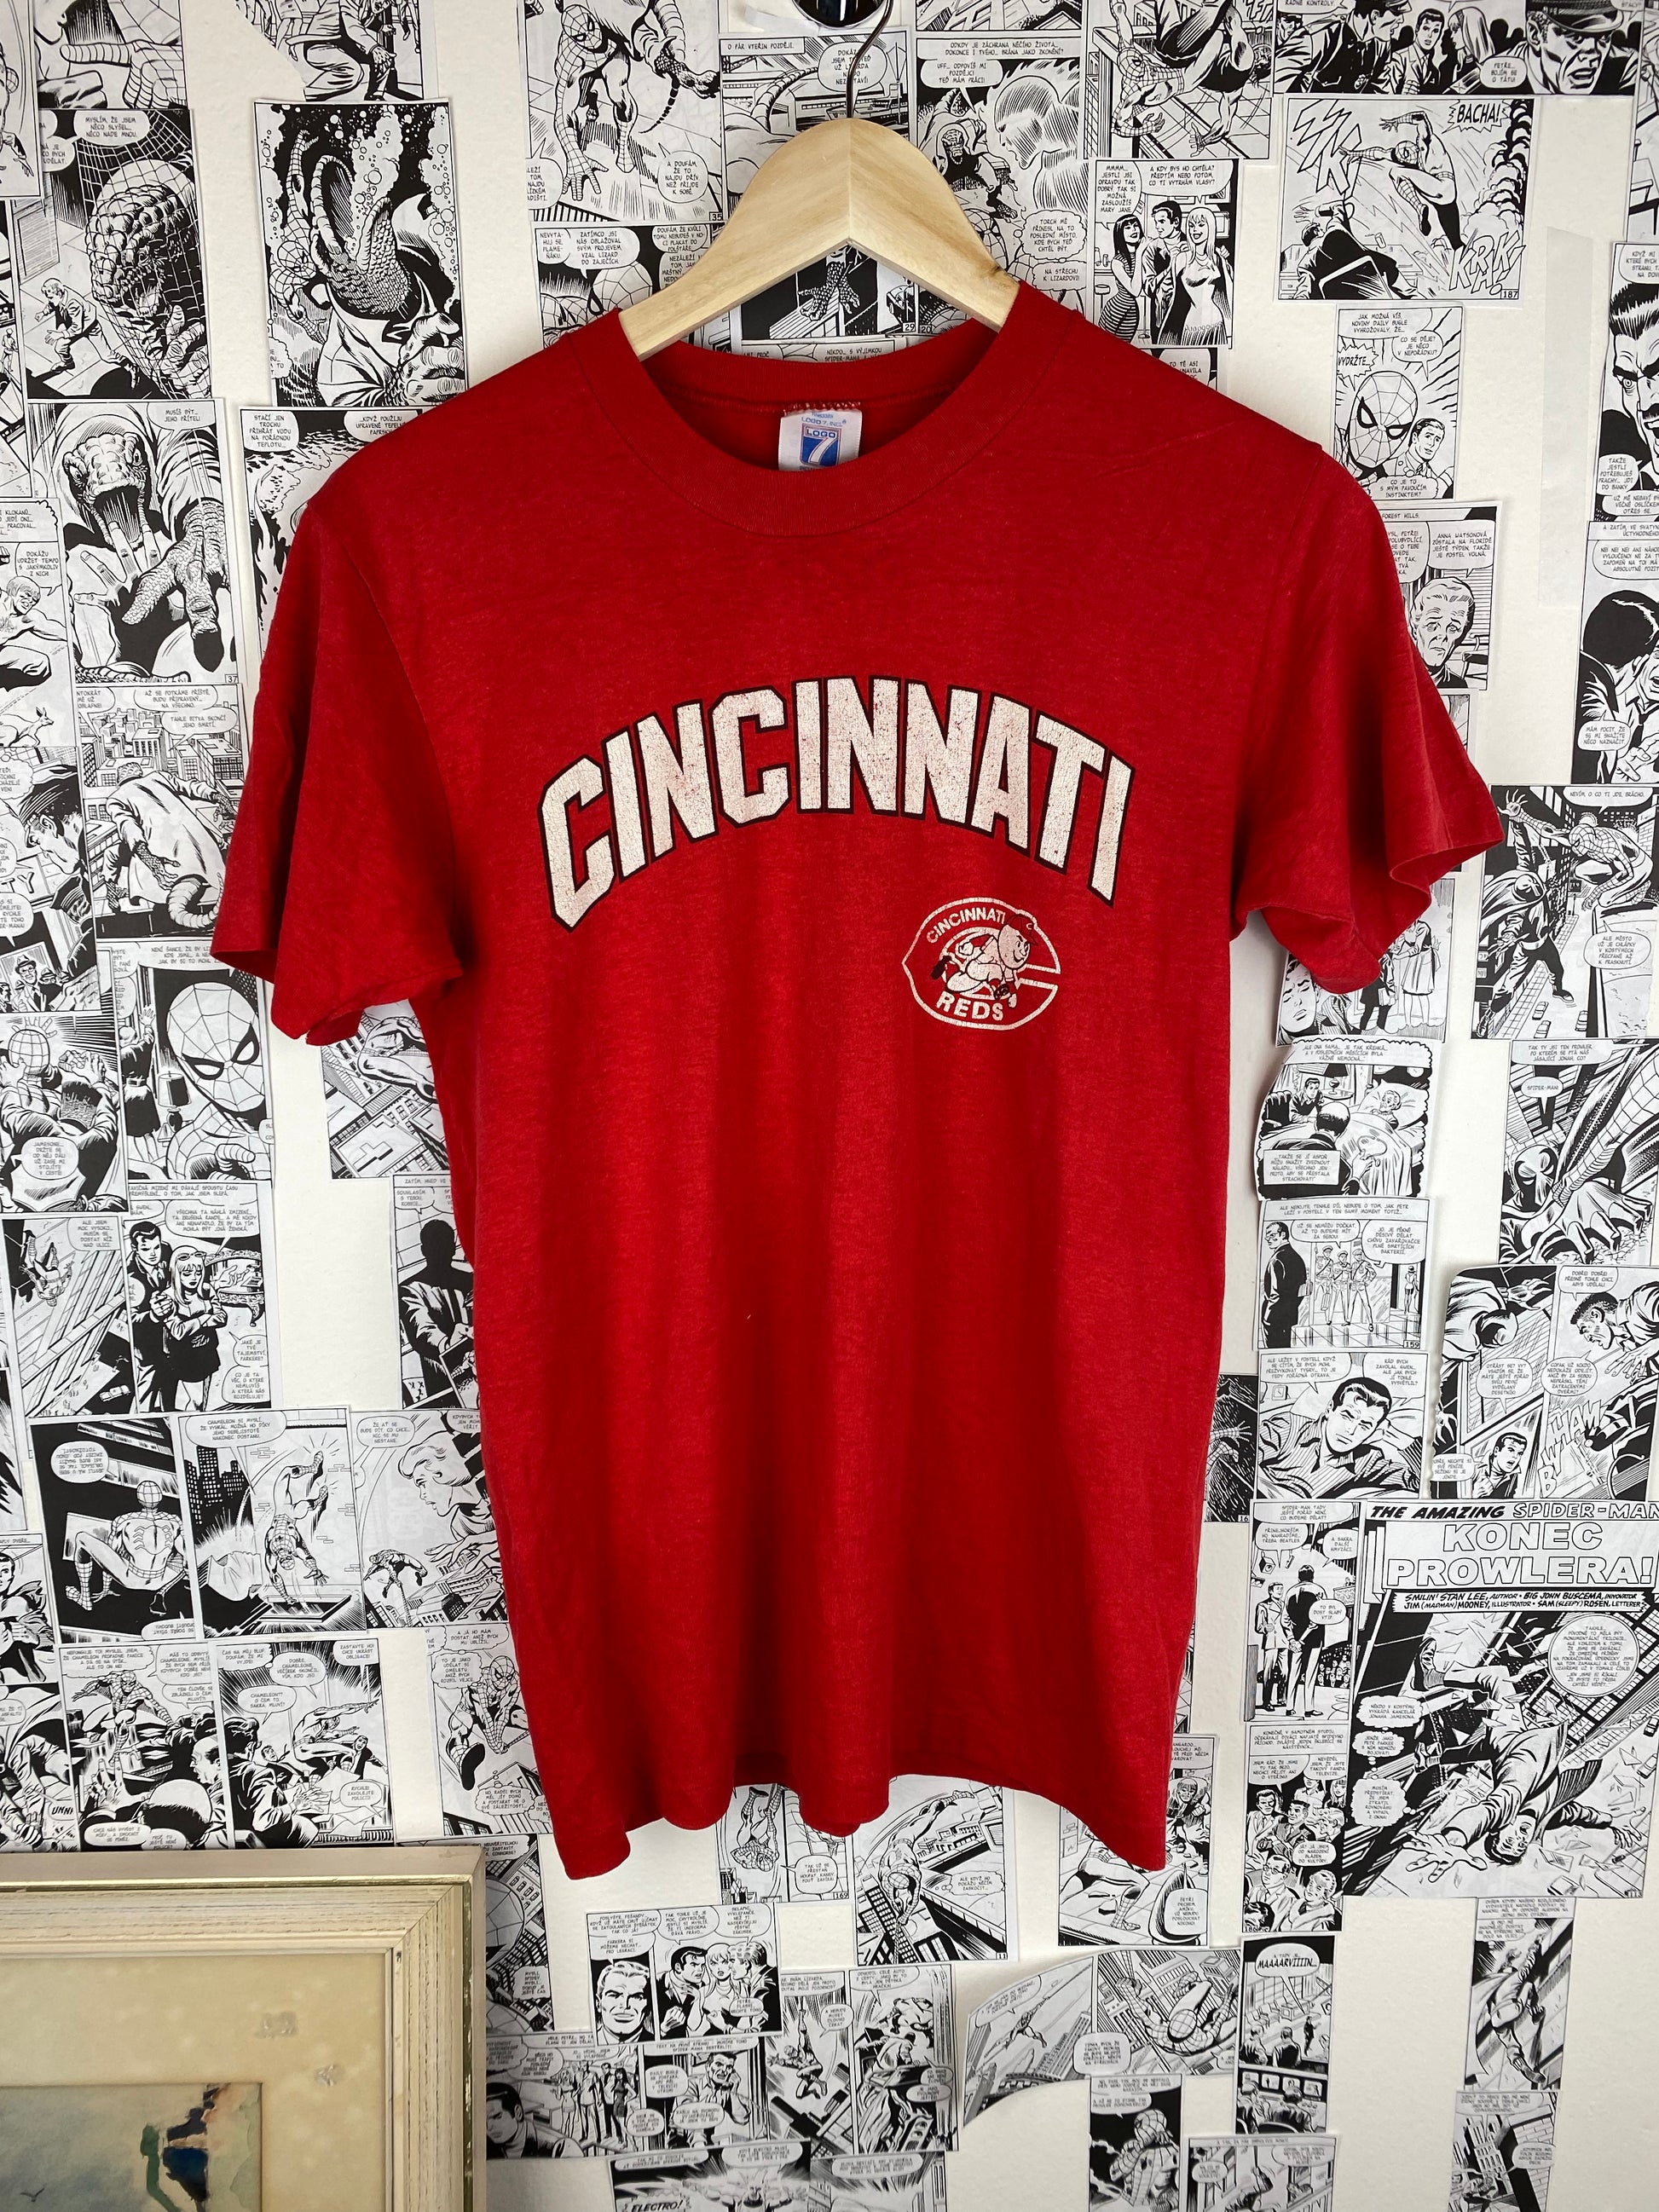 Vintage 80s Cincinnati Graphic T-shirt